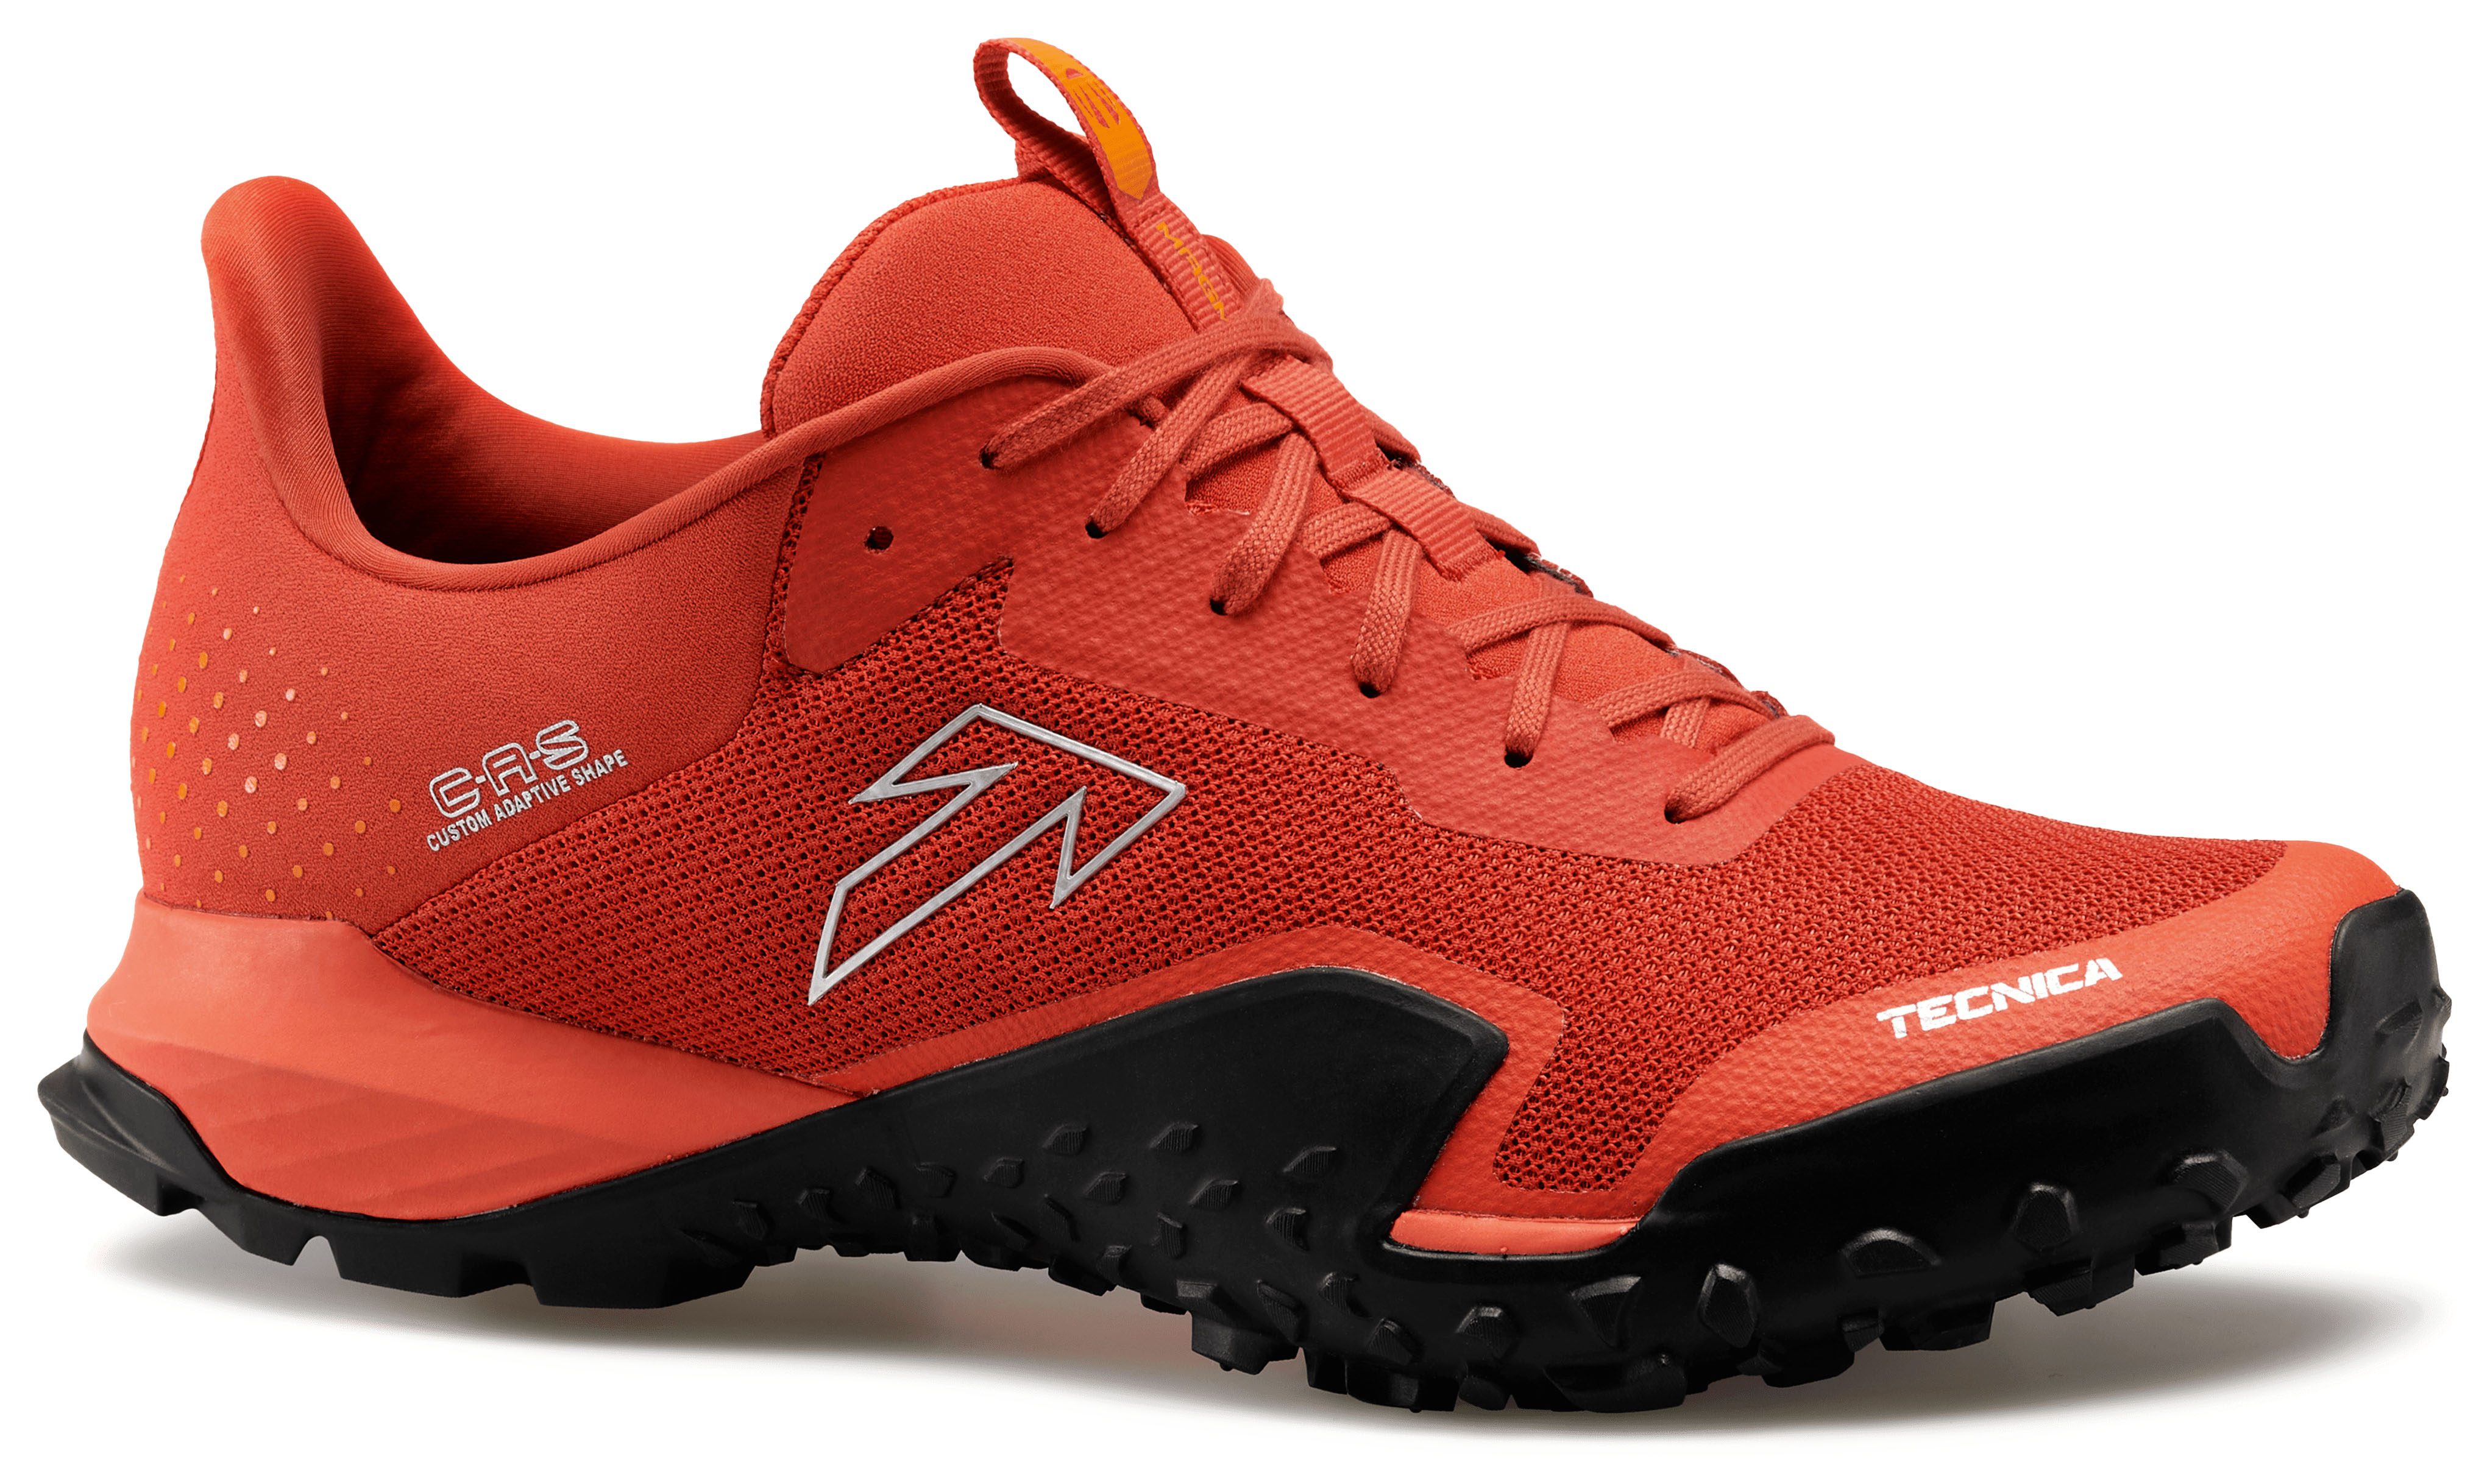 Tecnica Magma hiking shoes